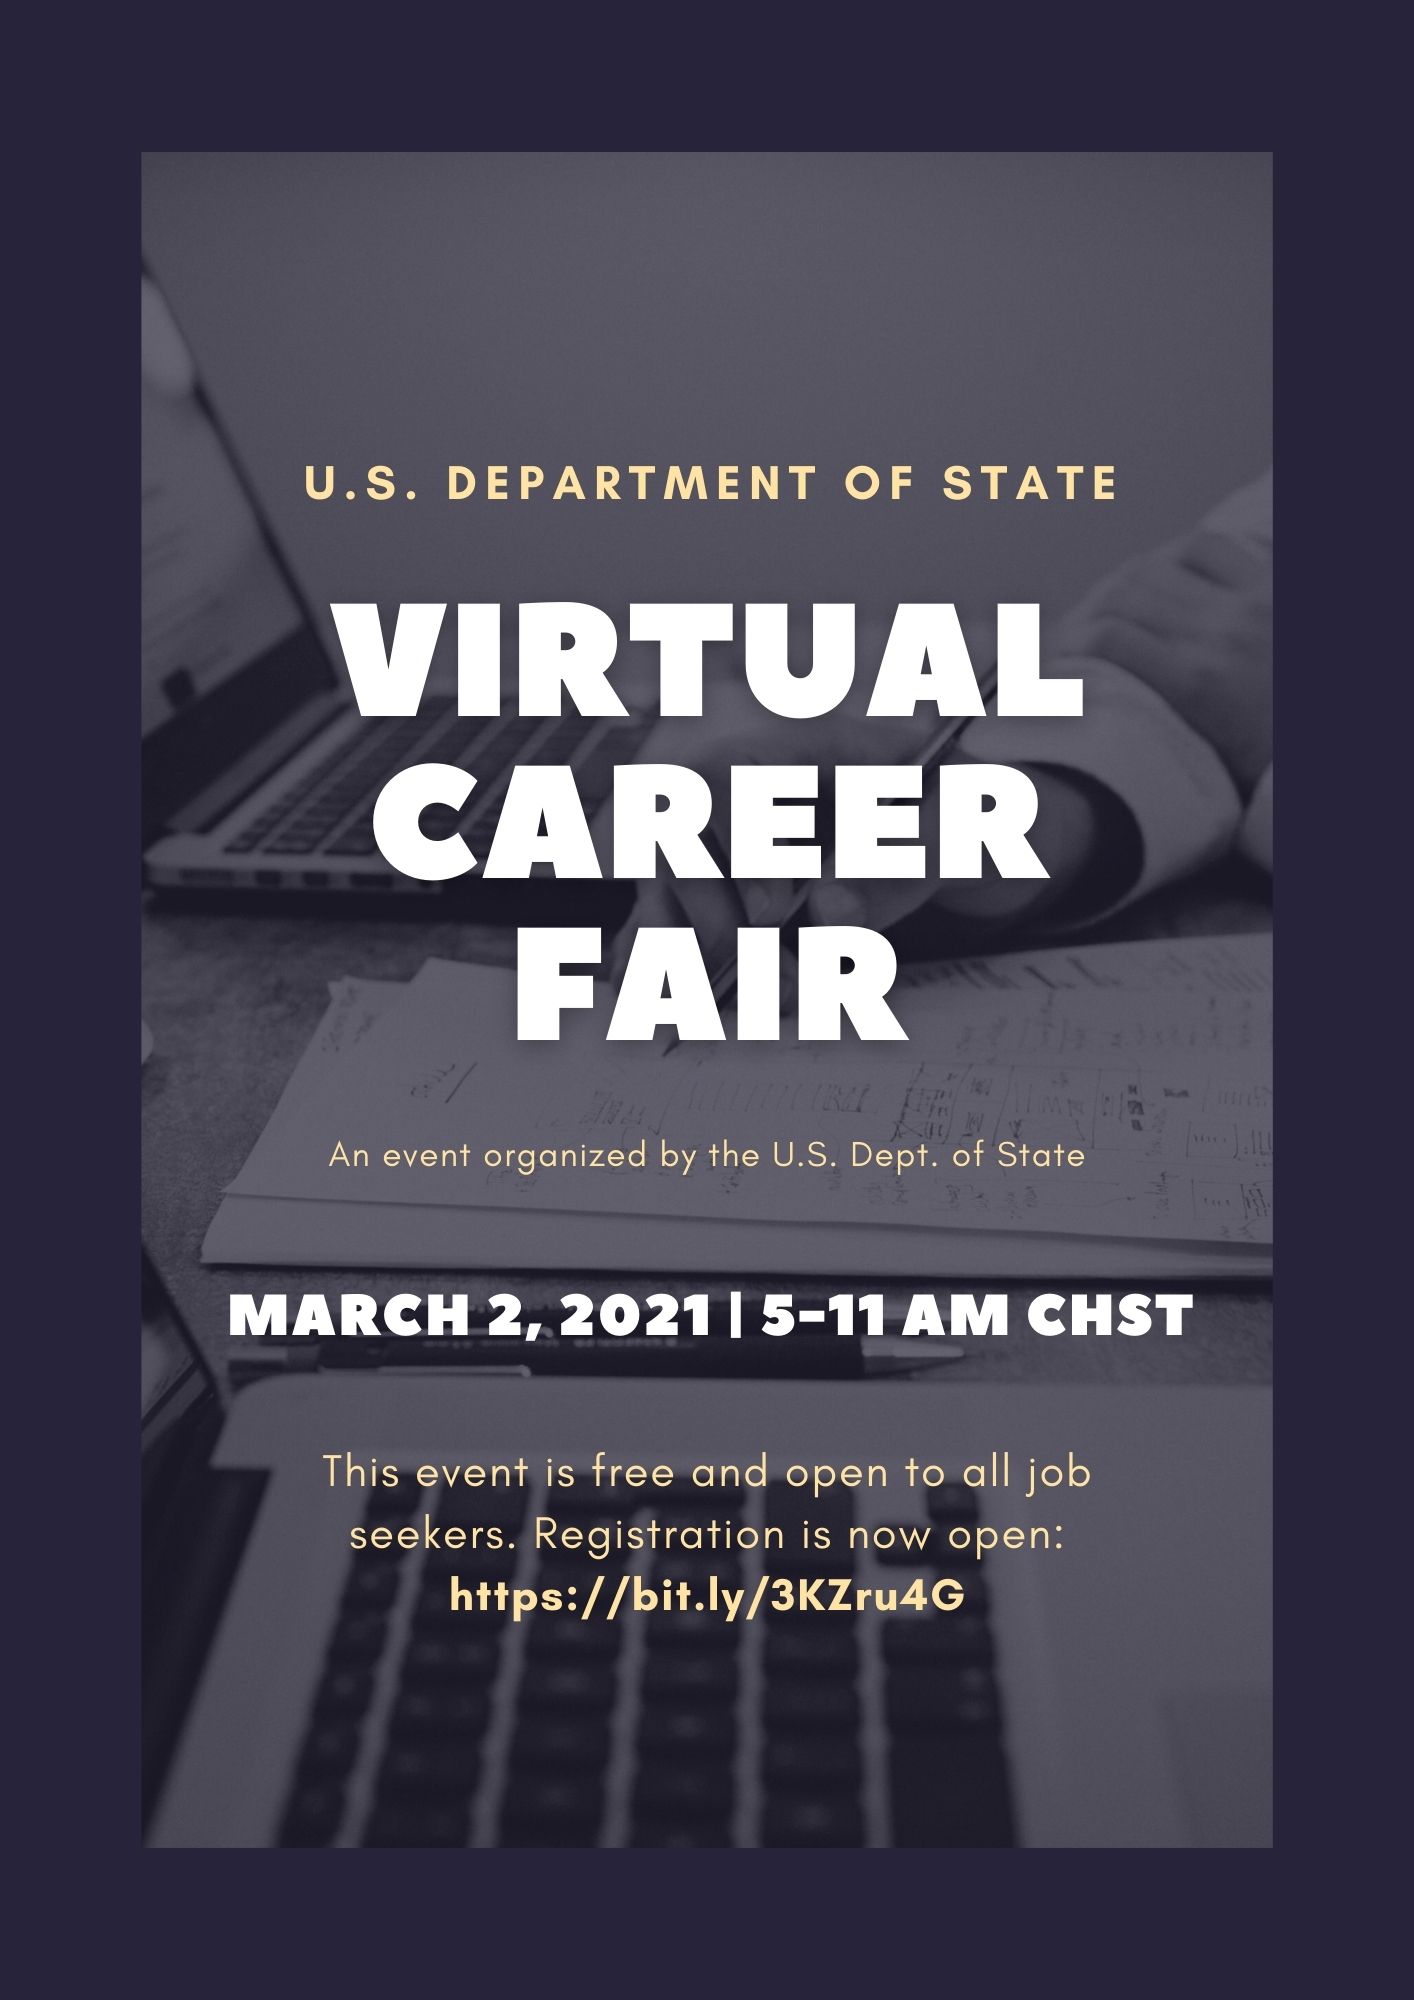 U.S. Department of State Virtual Career Fair Flyer